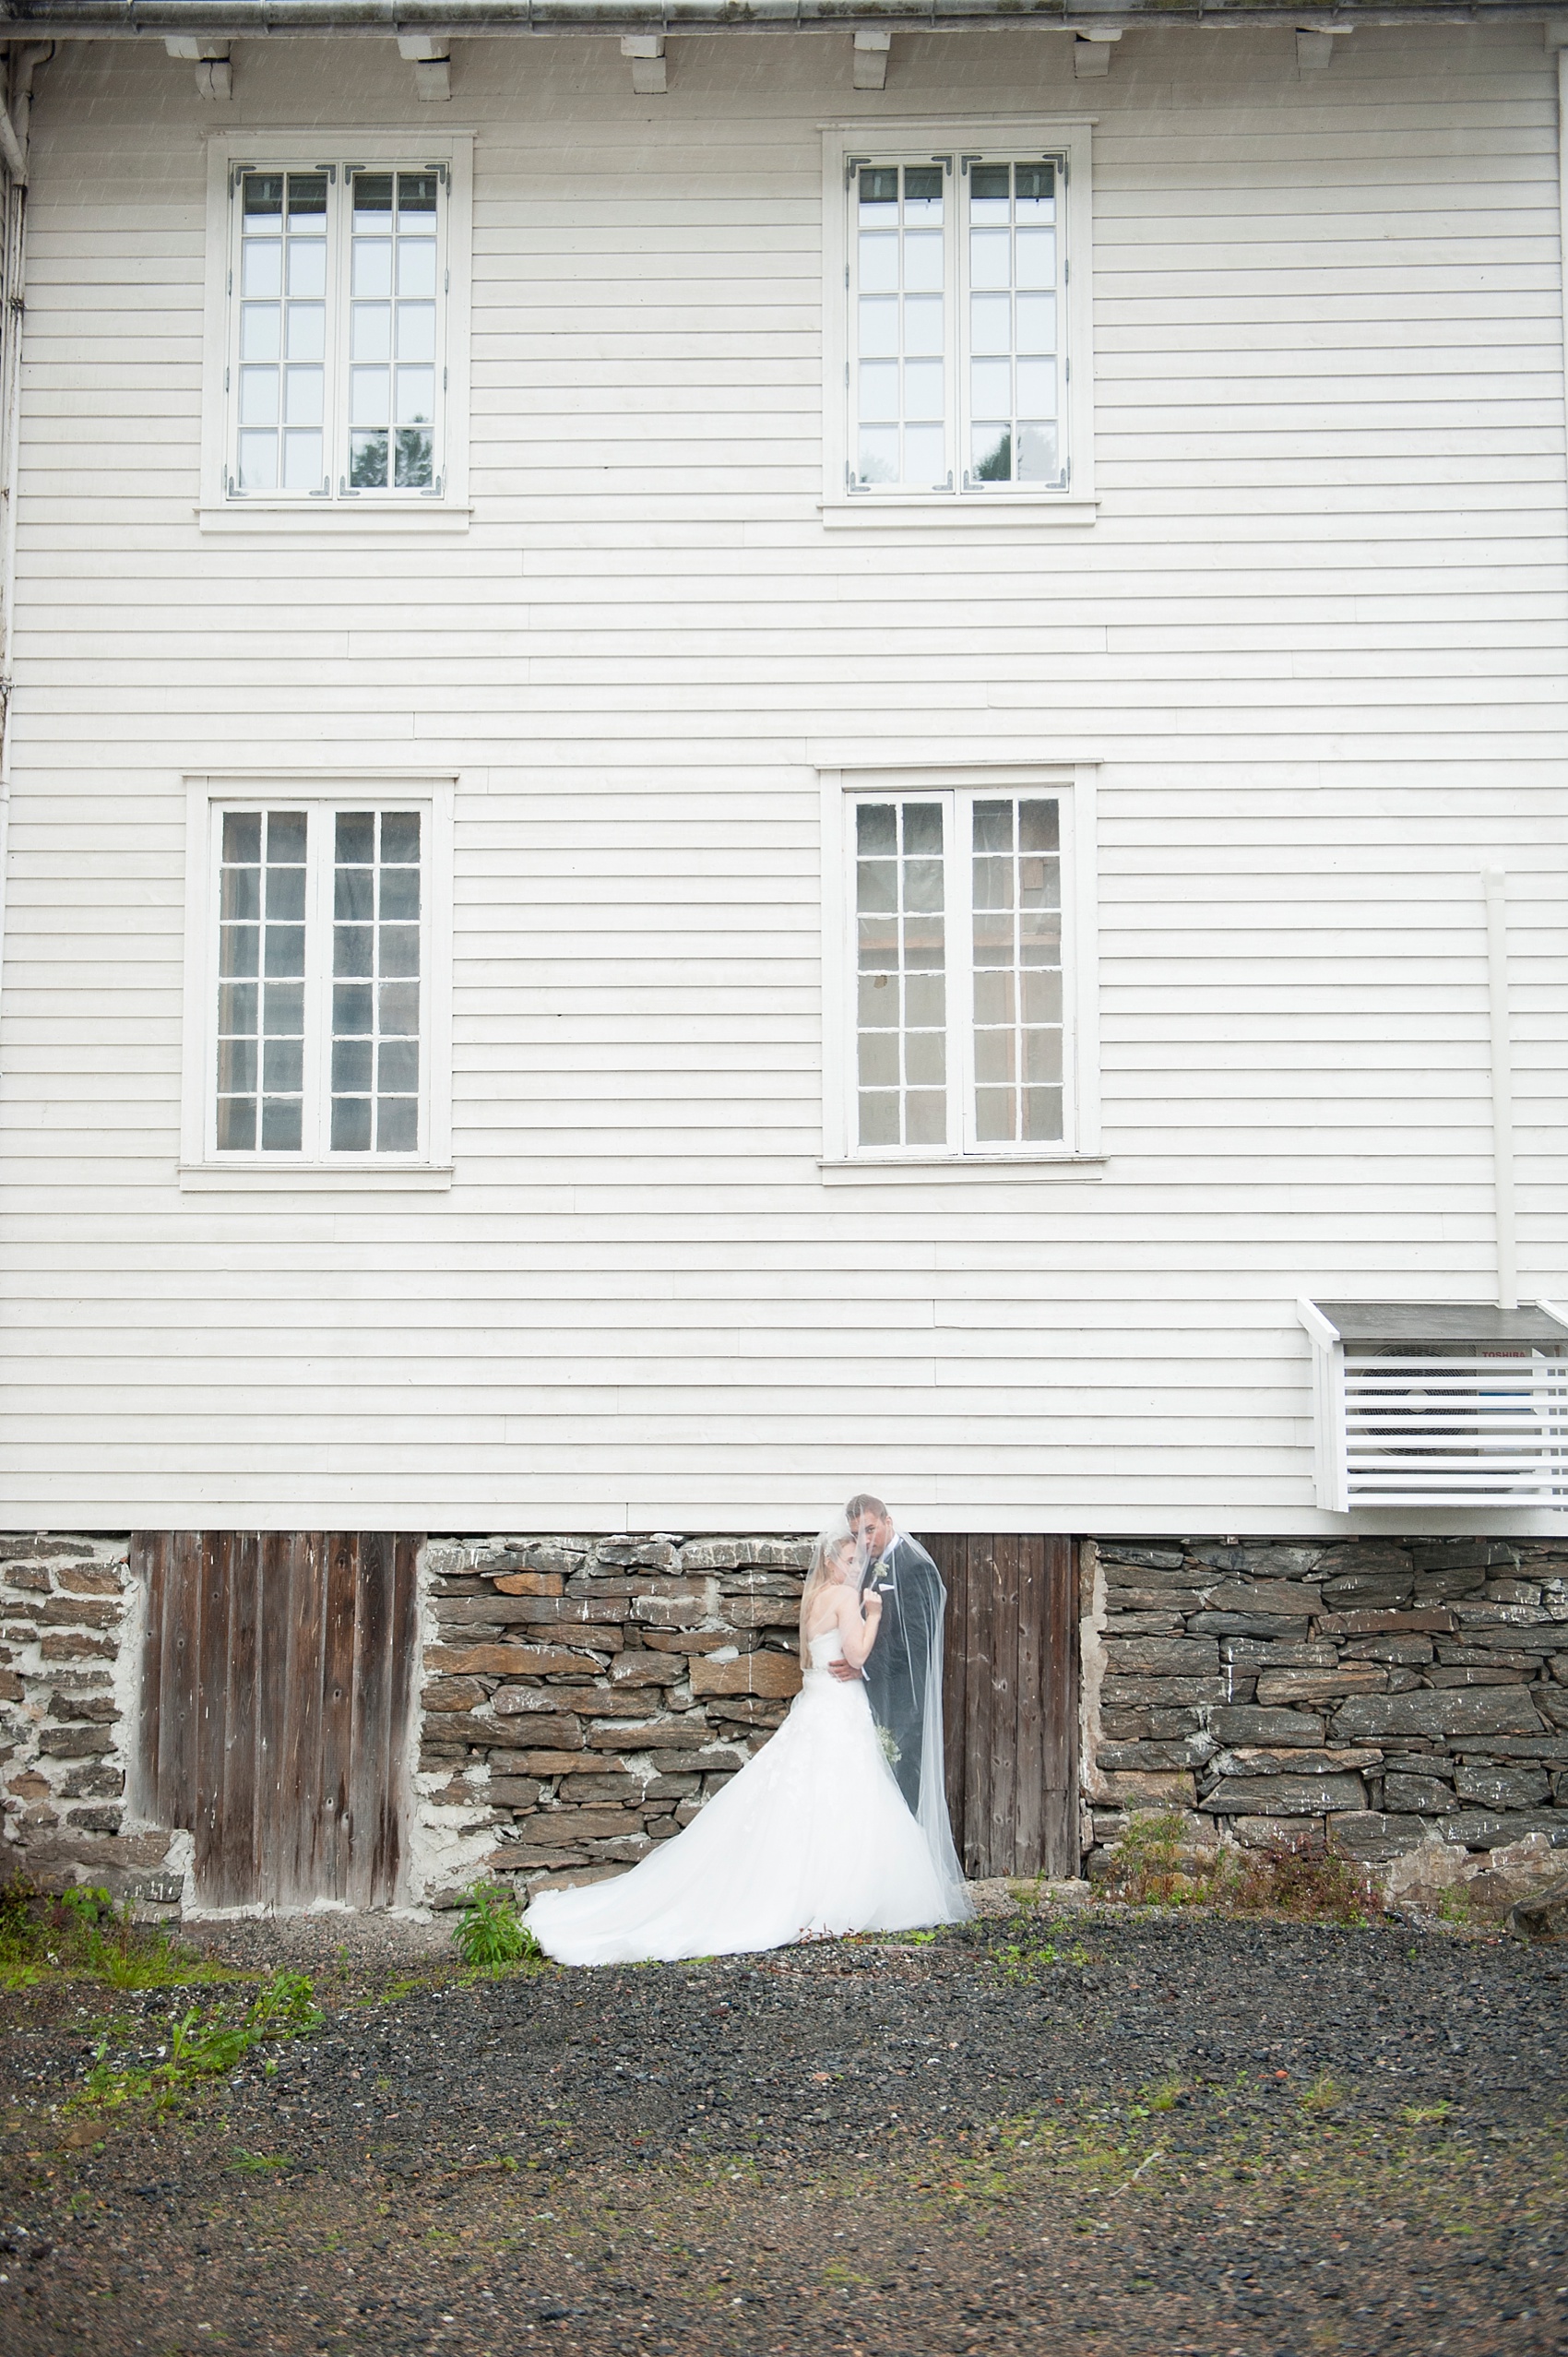 Bergen, Norway wedding photos by destination wedding photographer Mikkel Paige photography.